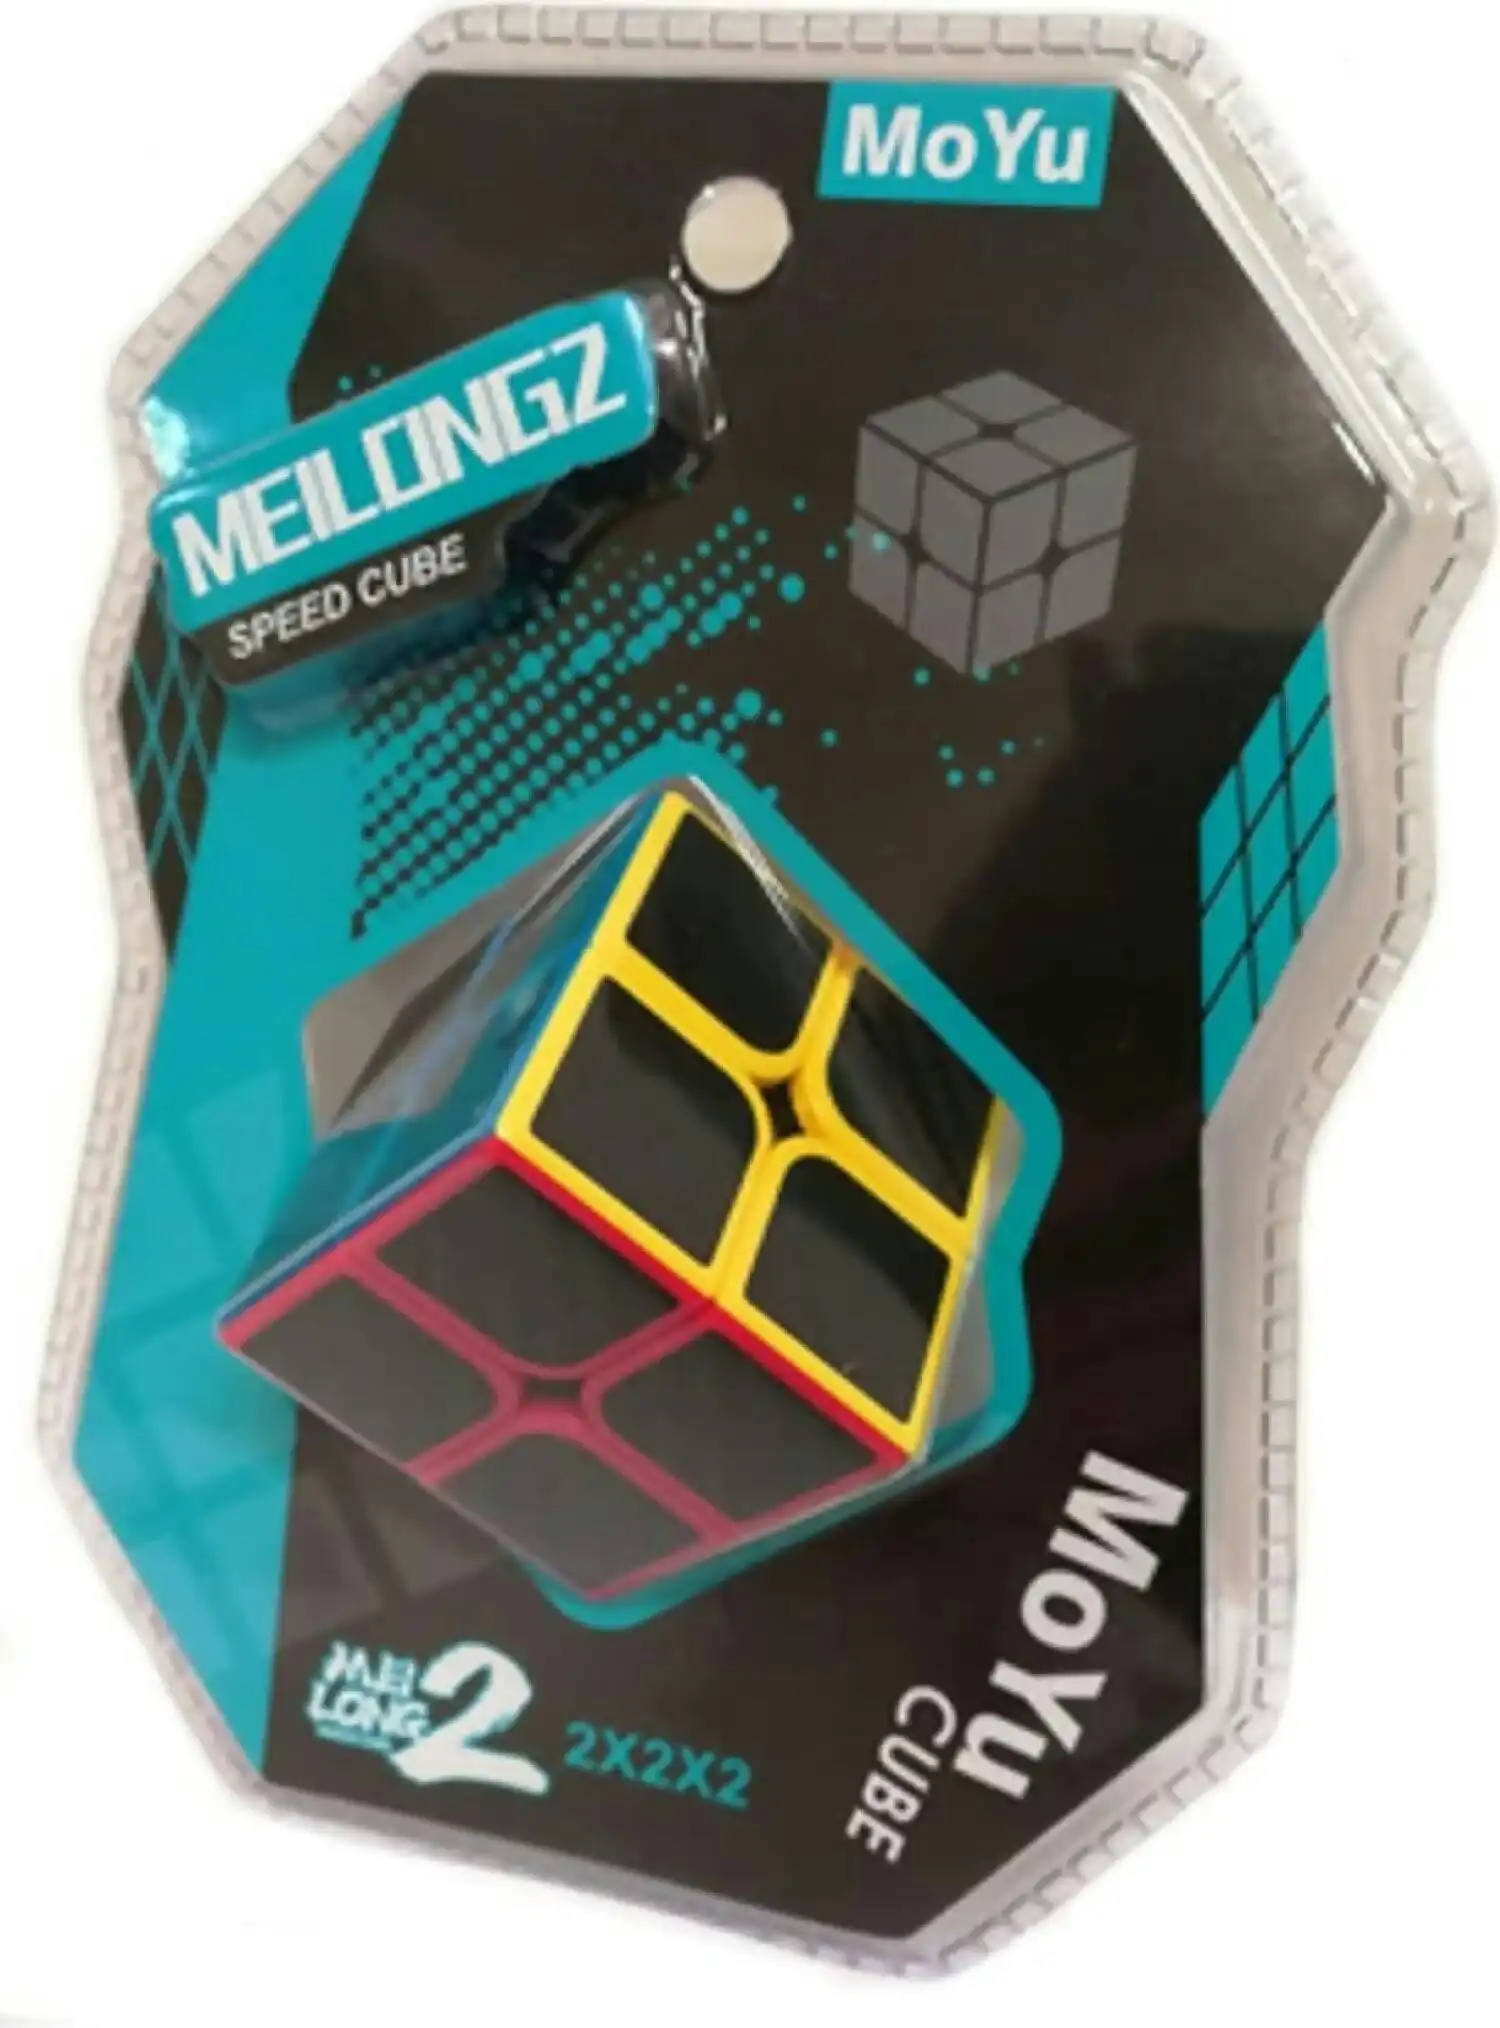 MoYu - Meilong 2 X 2 Speed Cube Blister Pack